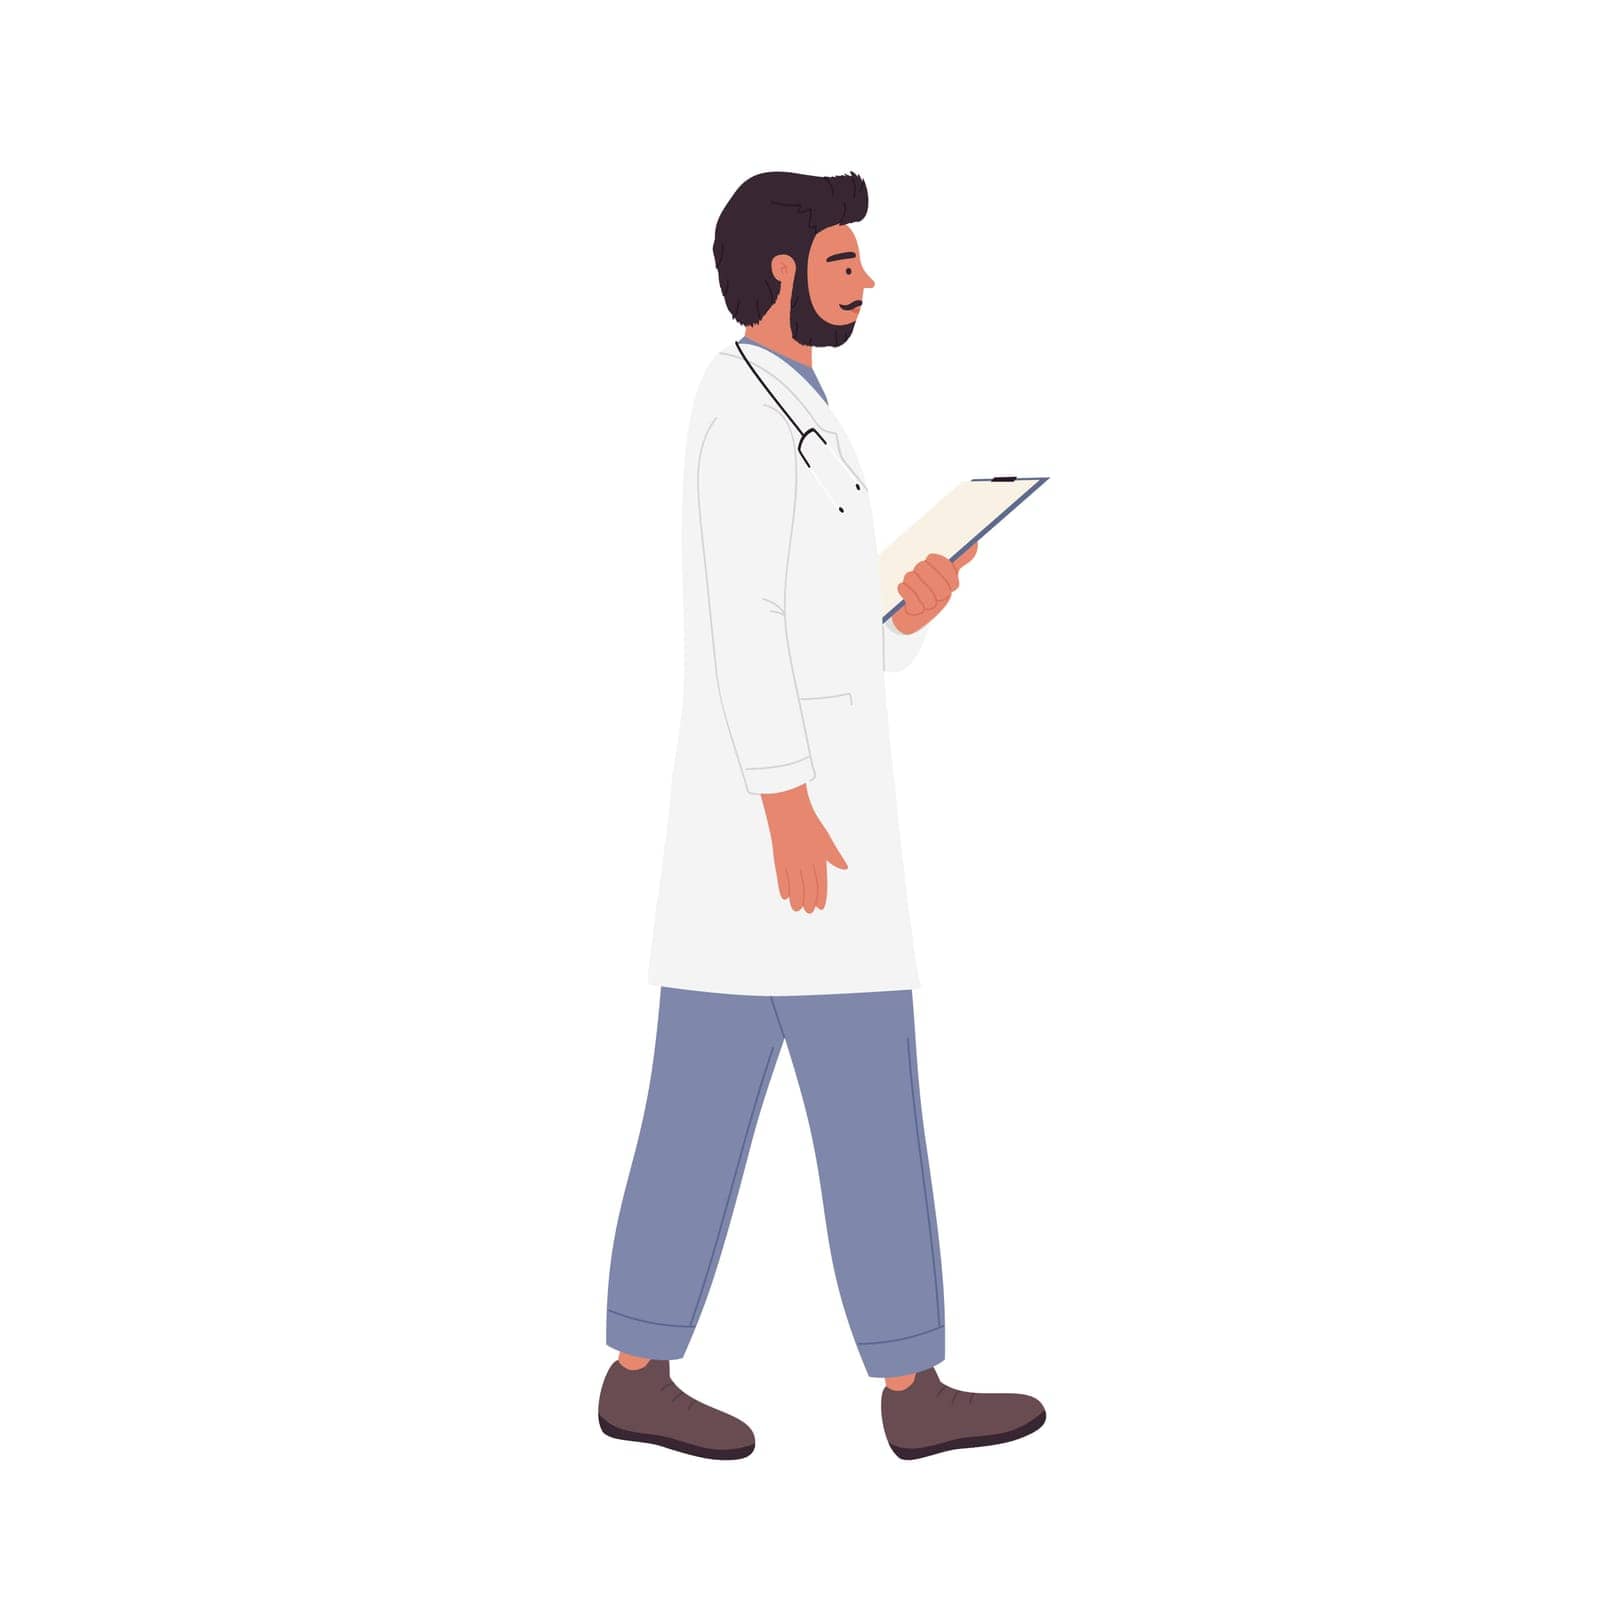 Walking male doctor in uniform. Hospital worker, medical care and help vector illustration